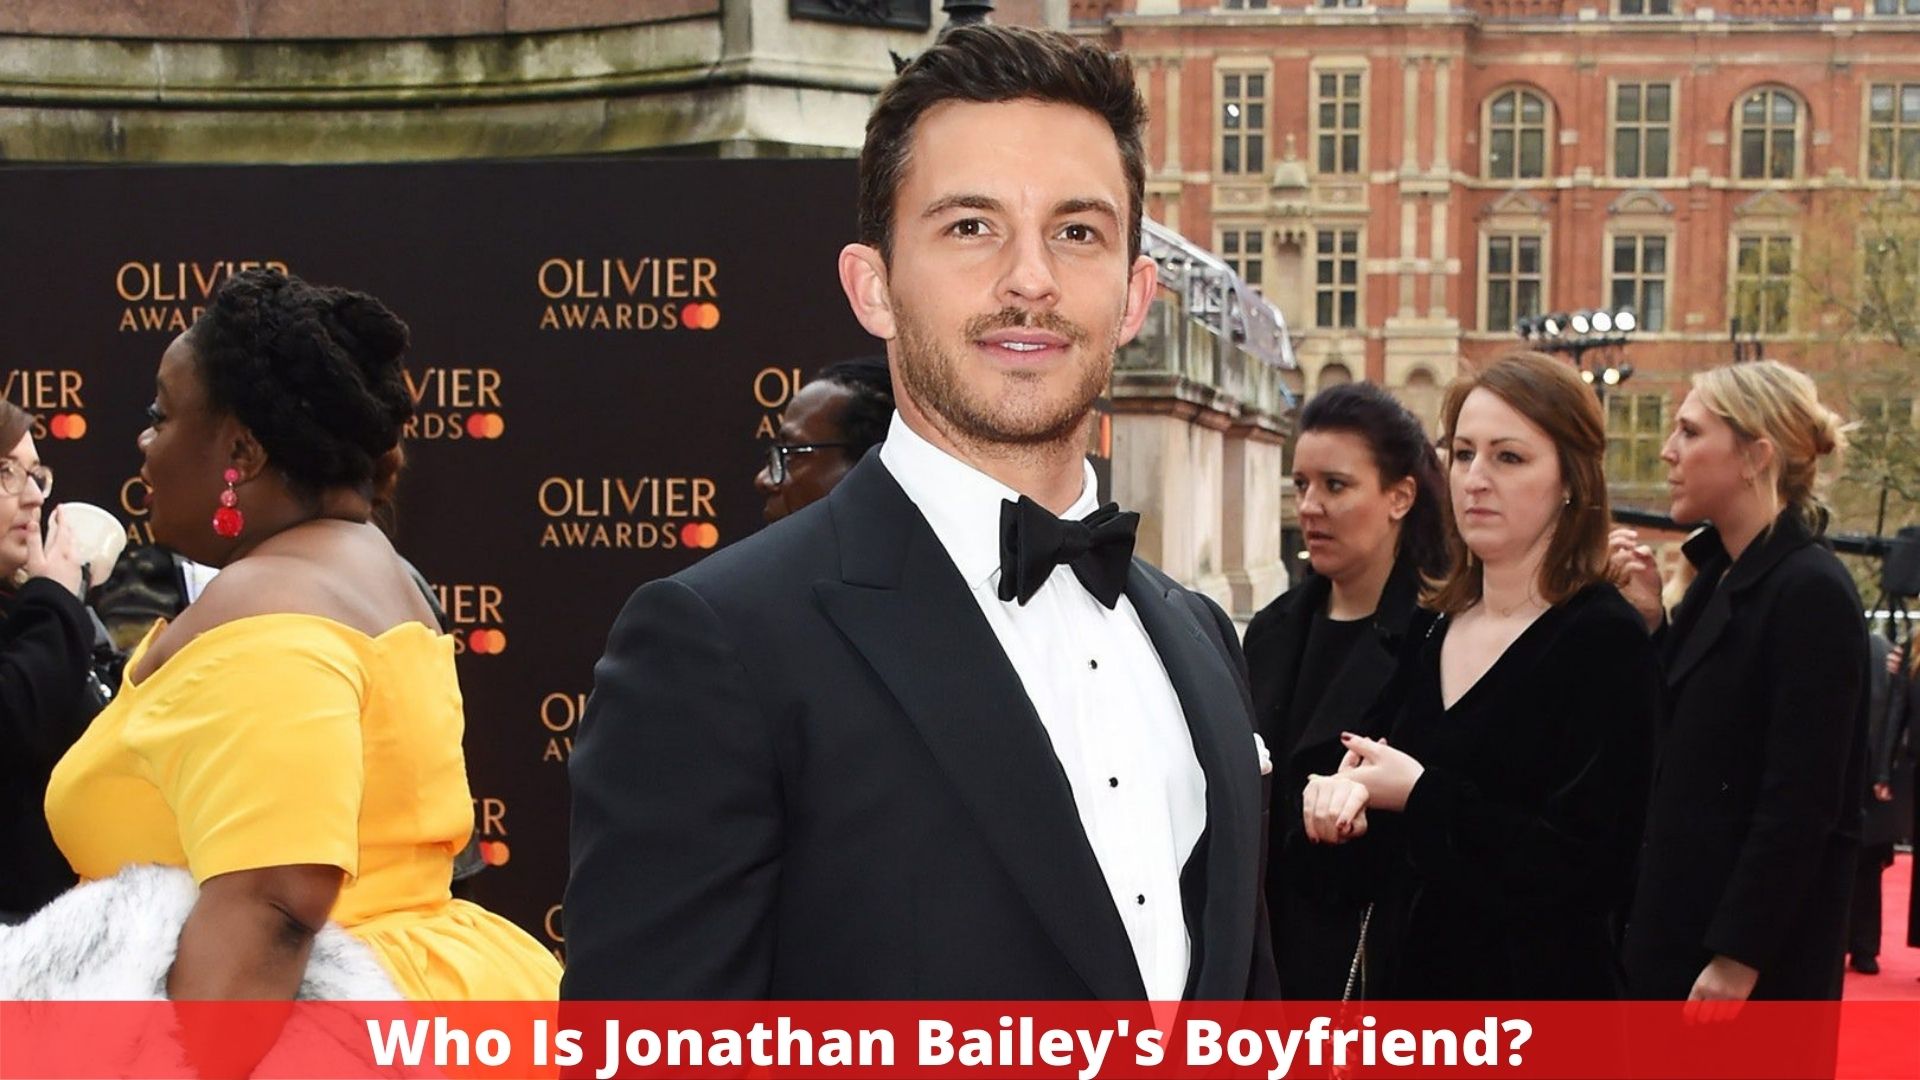 Who Is Jonathan Bailey's Boyfriend?